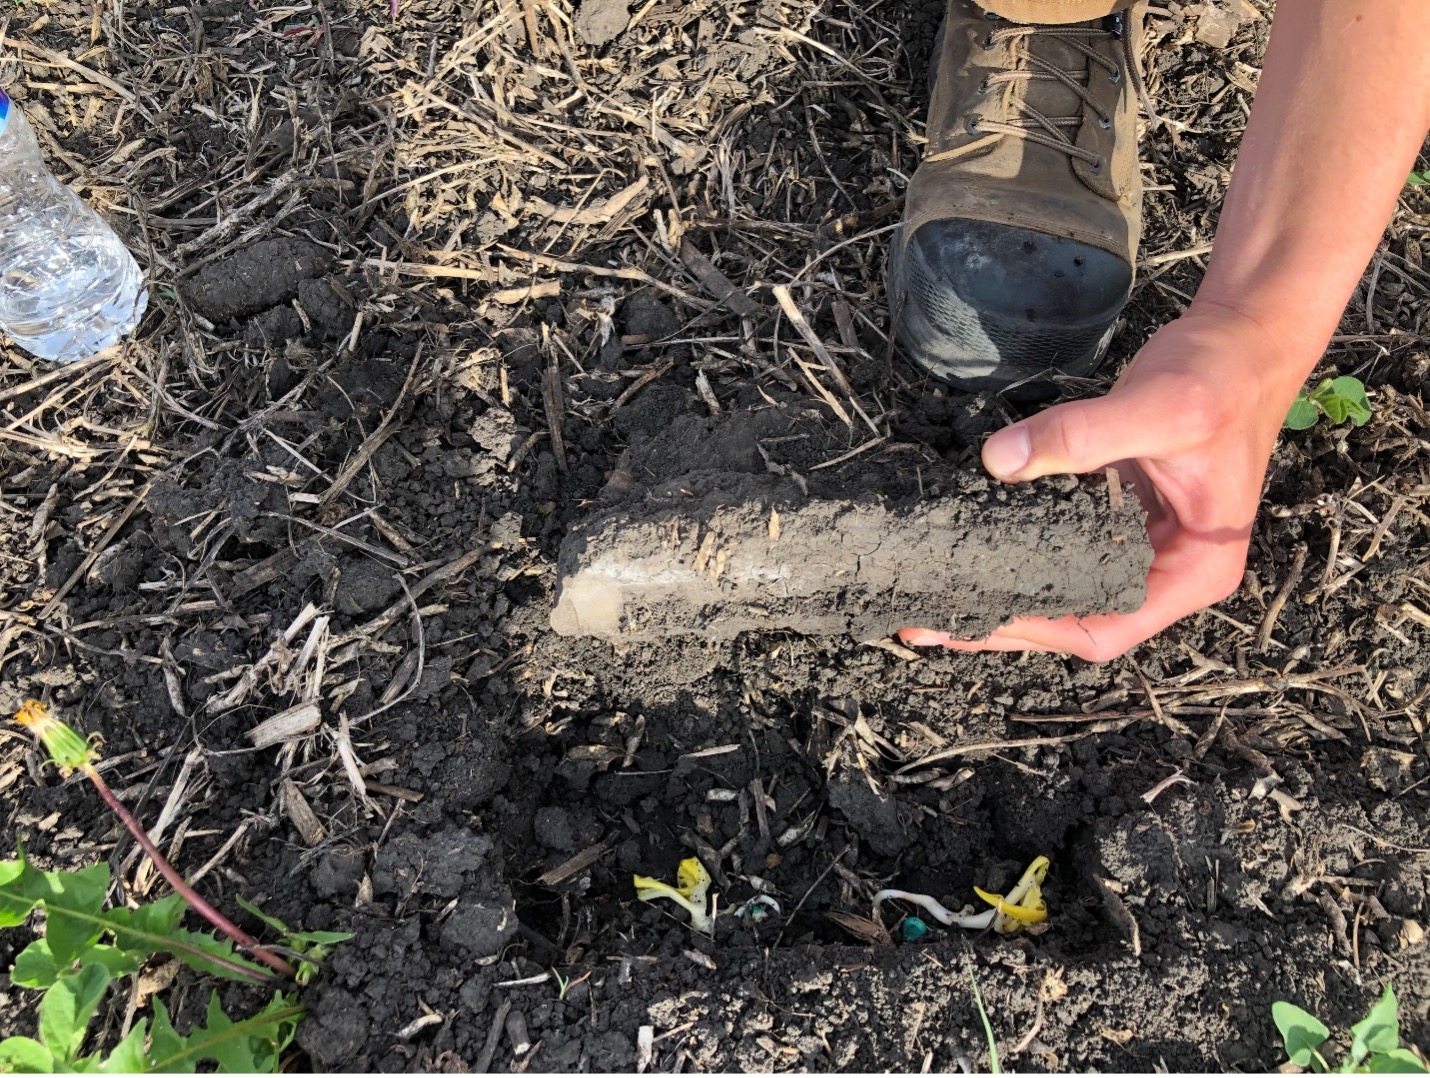 wet planting creates compact soil clumps